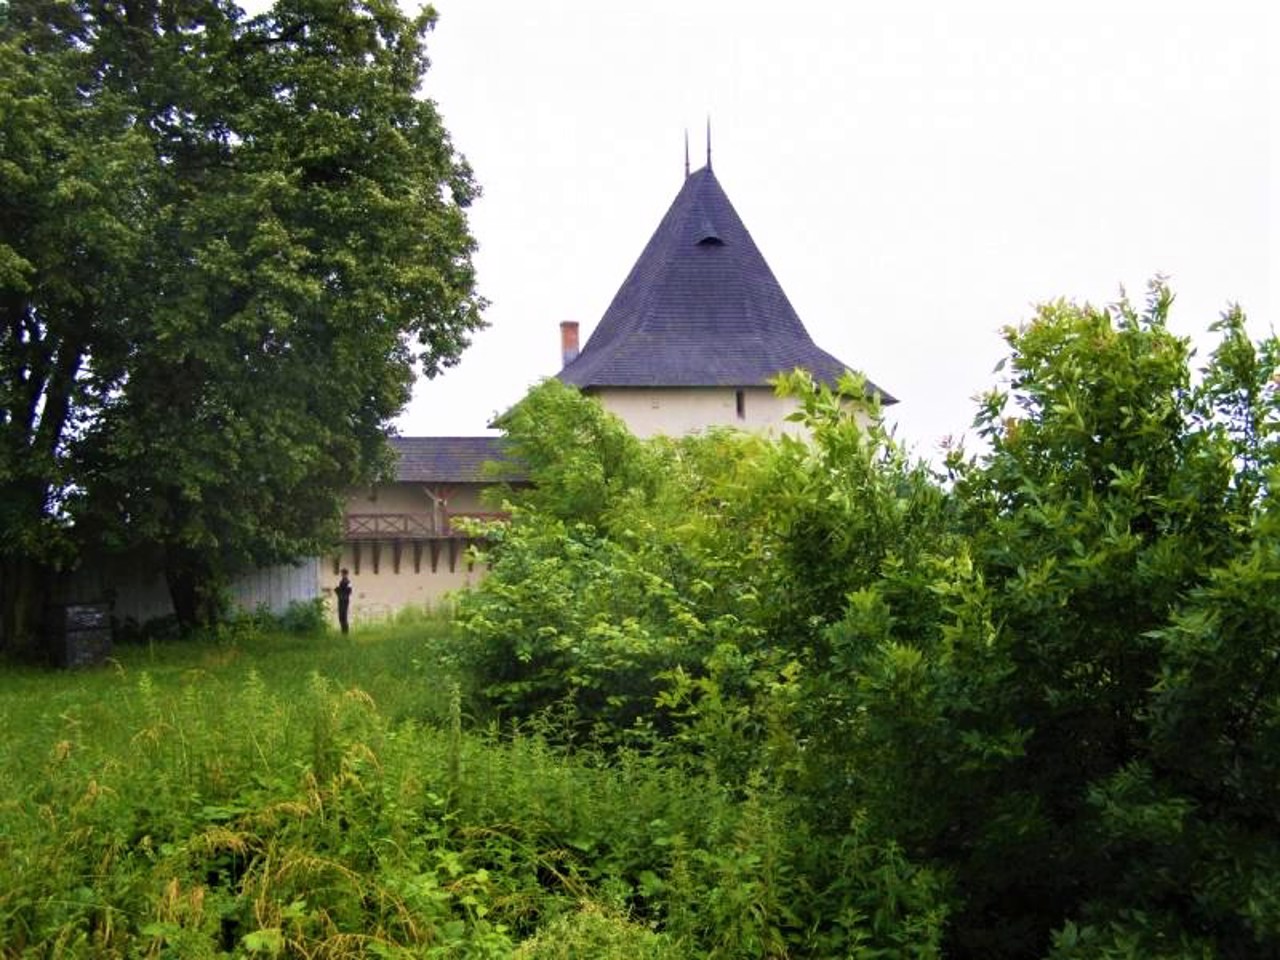 Halych Castle